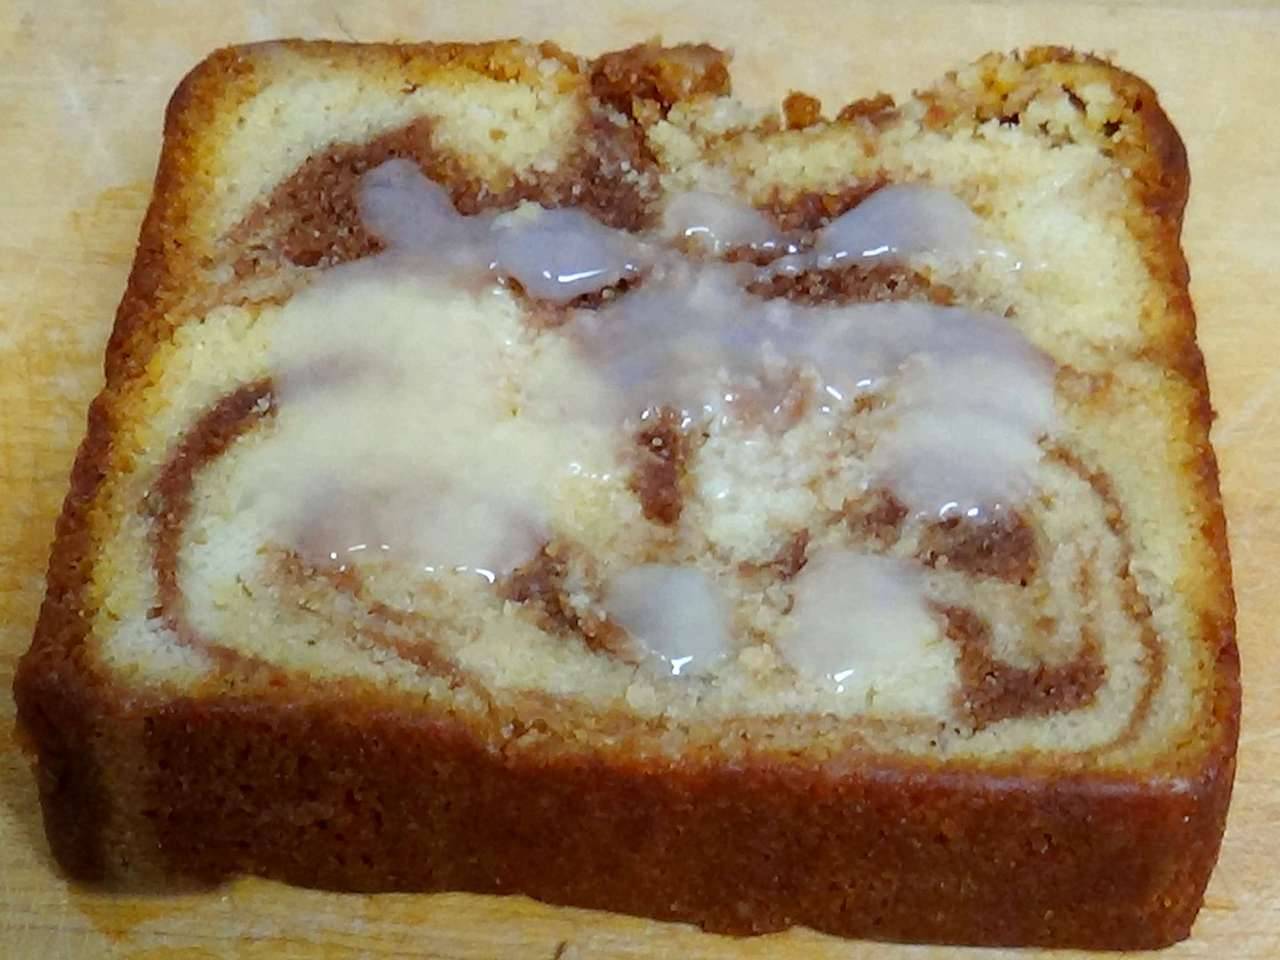 mycumonfood: My cum on Marble Cake. Source: https://allnatural.blobanon.com/2018/04/cumiliscious-marble-swirl-cake/